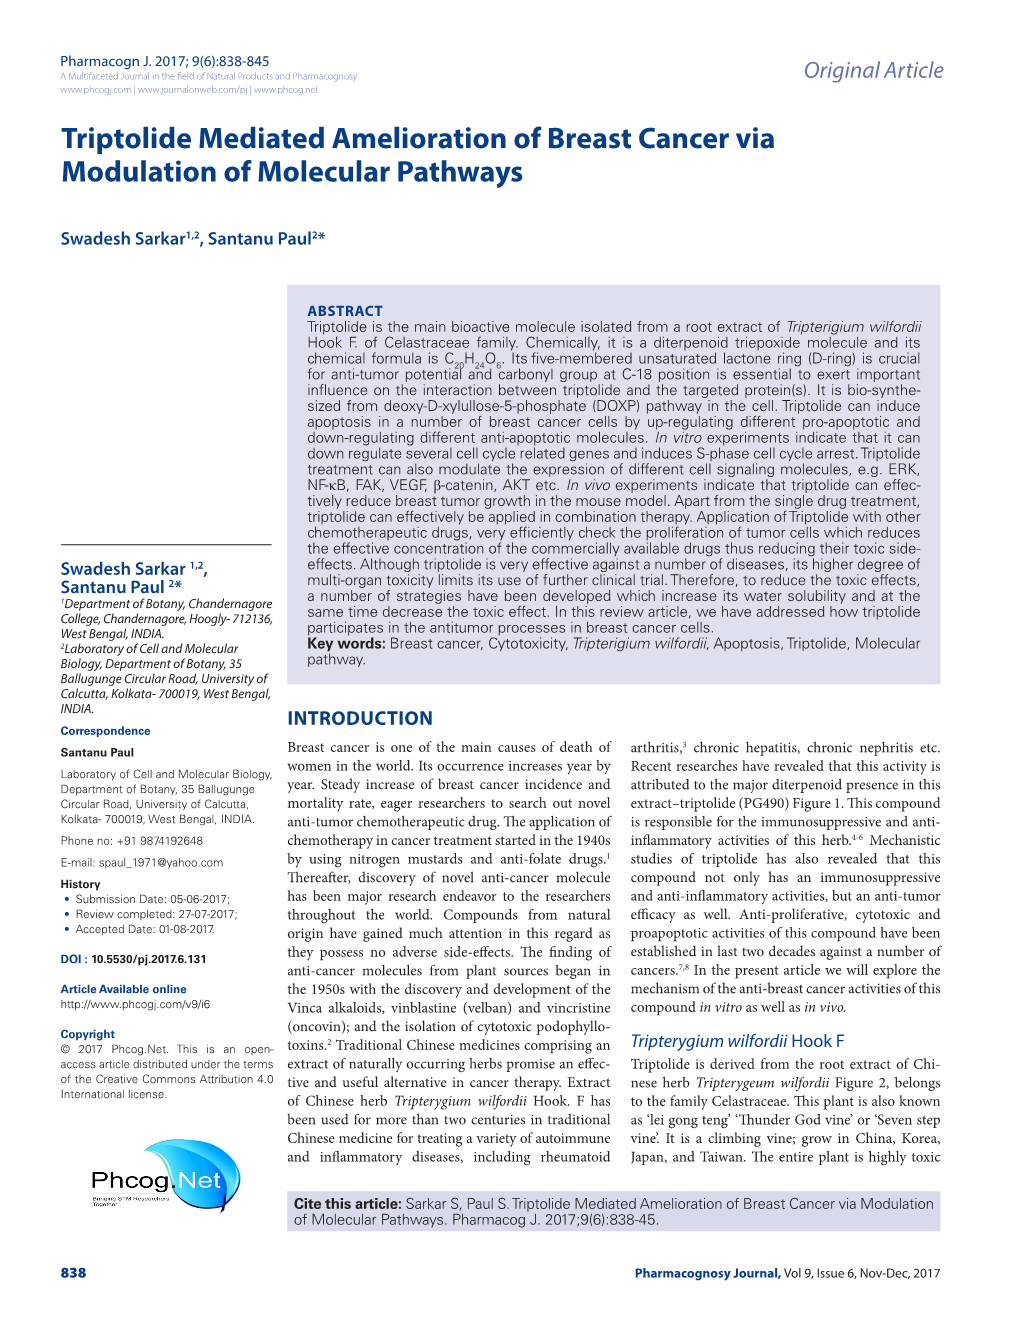 Triptolide Mediated Amelioration of Breast Cancer Via Modulation of Molecular Pathways